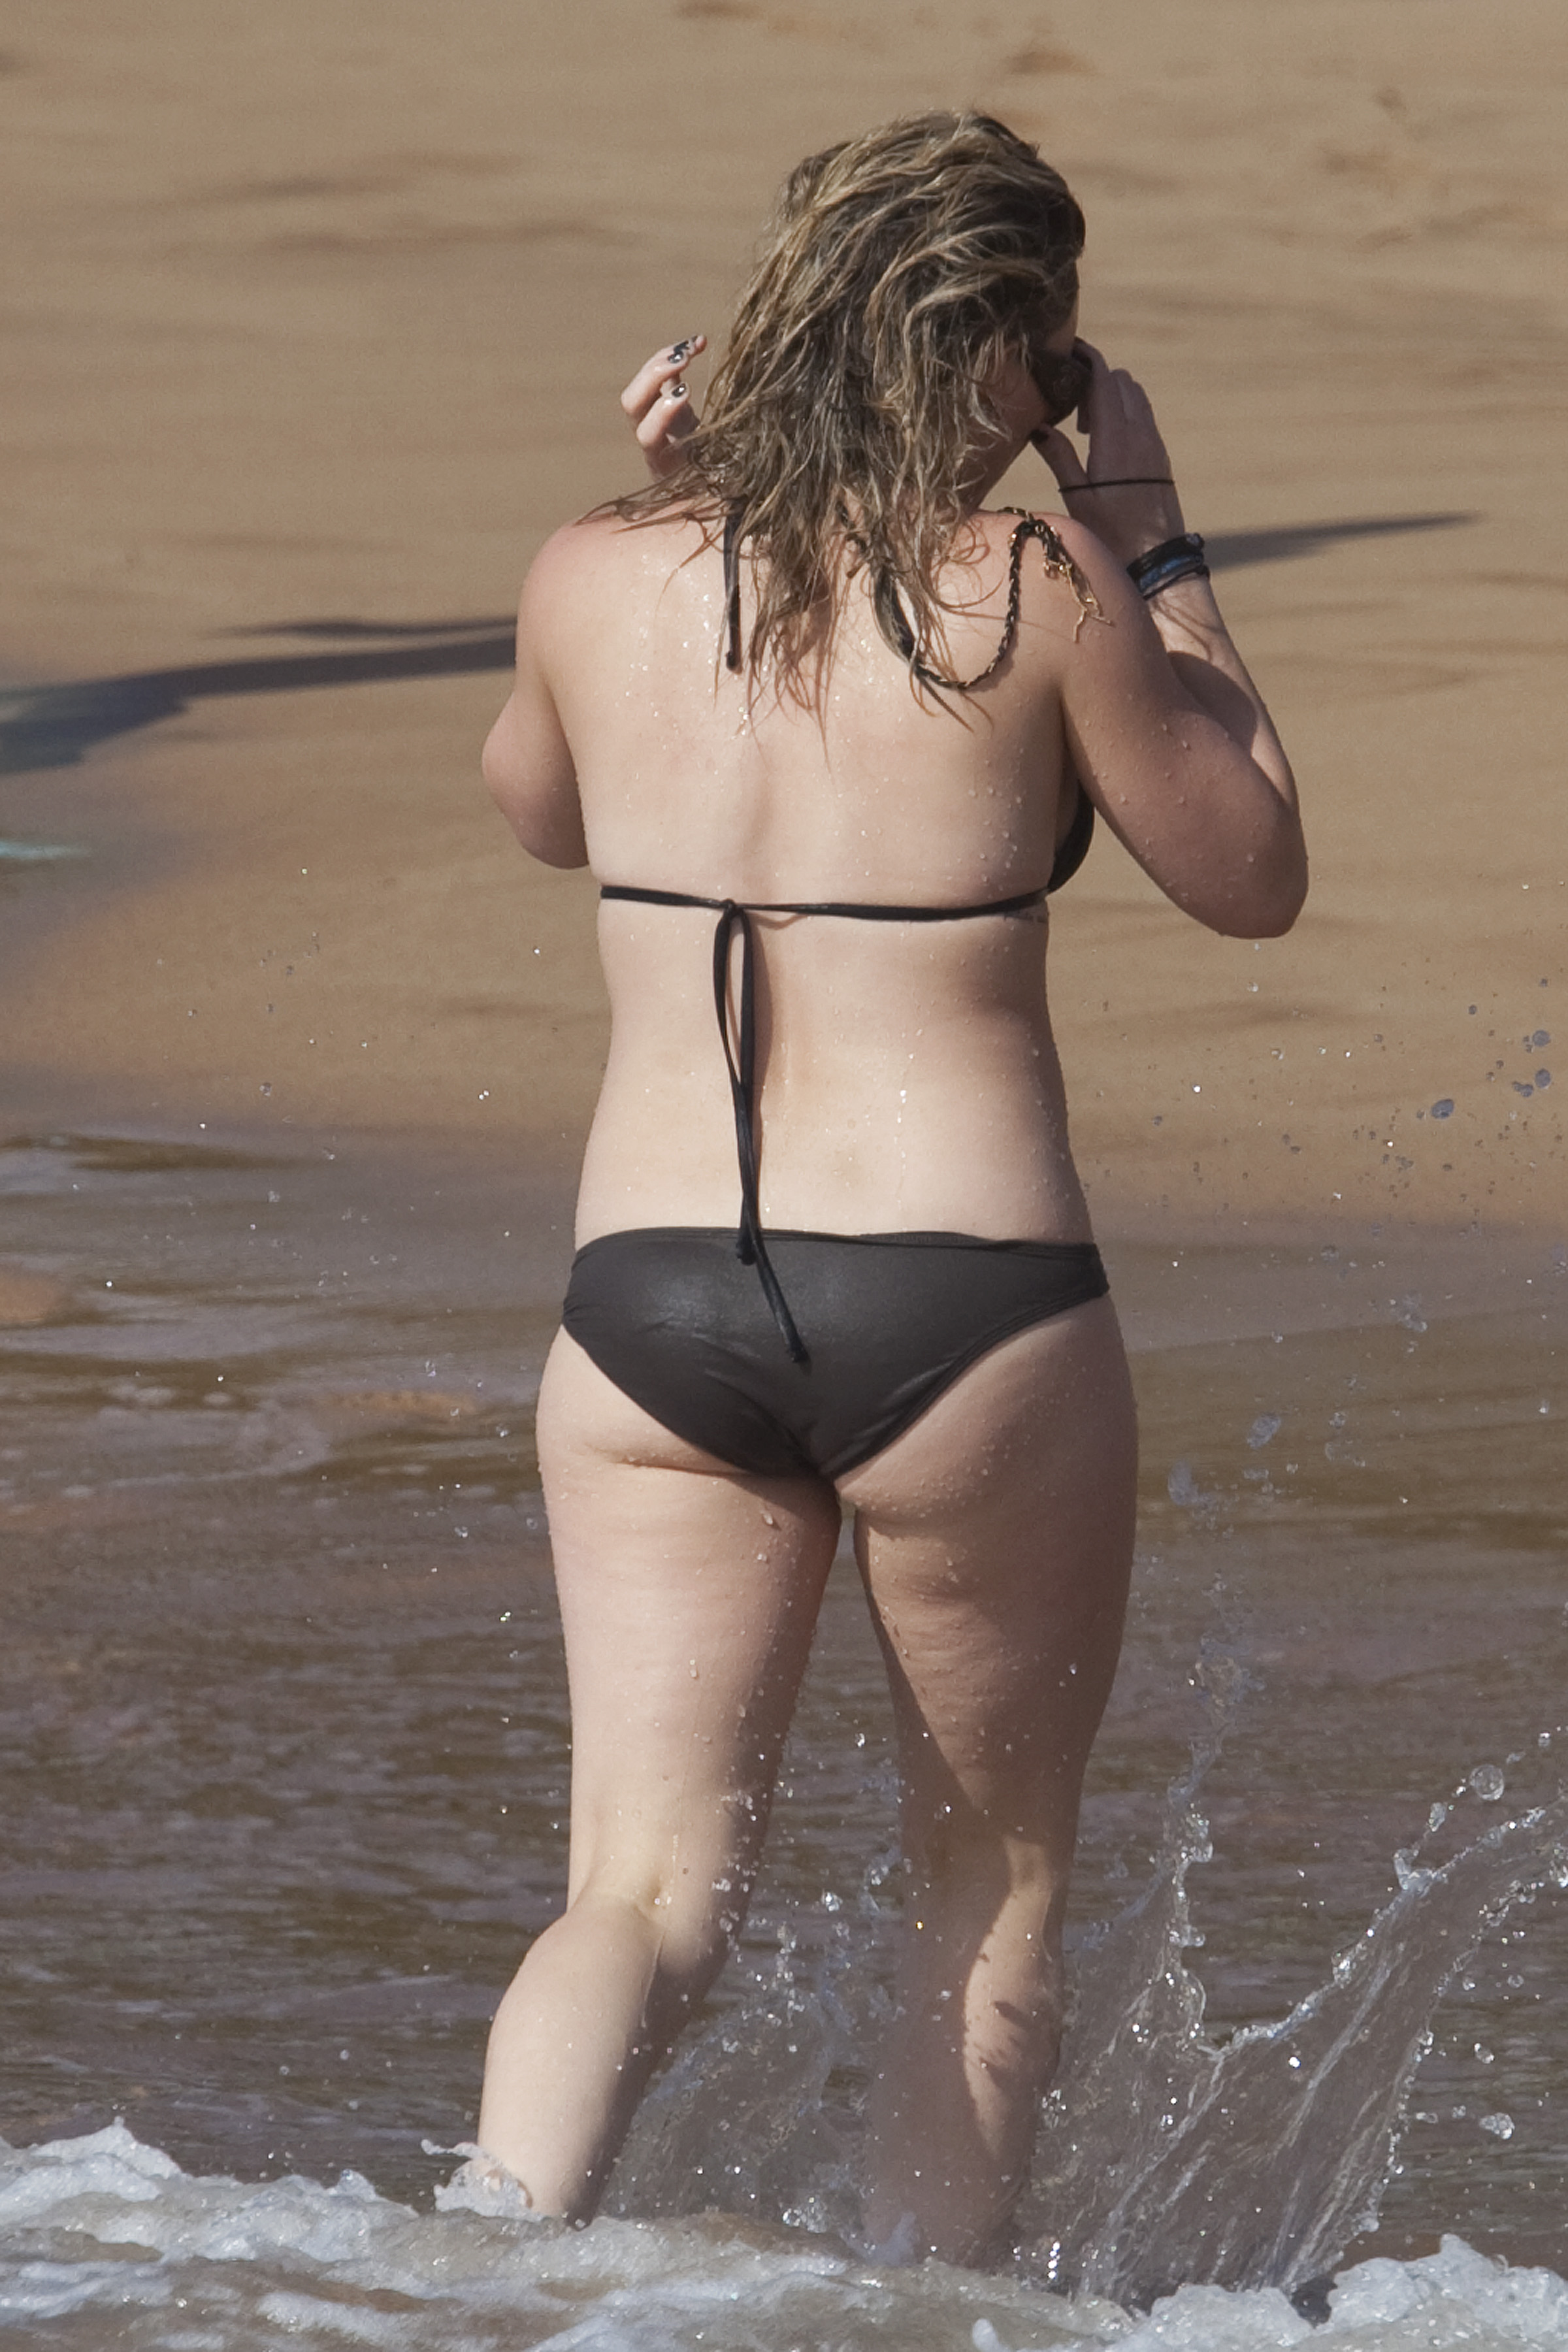 54841_Hilary_Duff_in_a_hot_black_bikini_during_a_visit_to_Hawaii-12_122_65lo.jpg